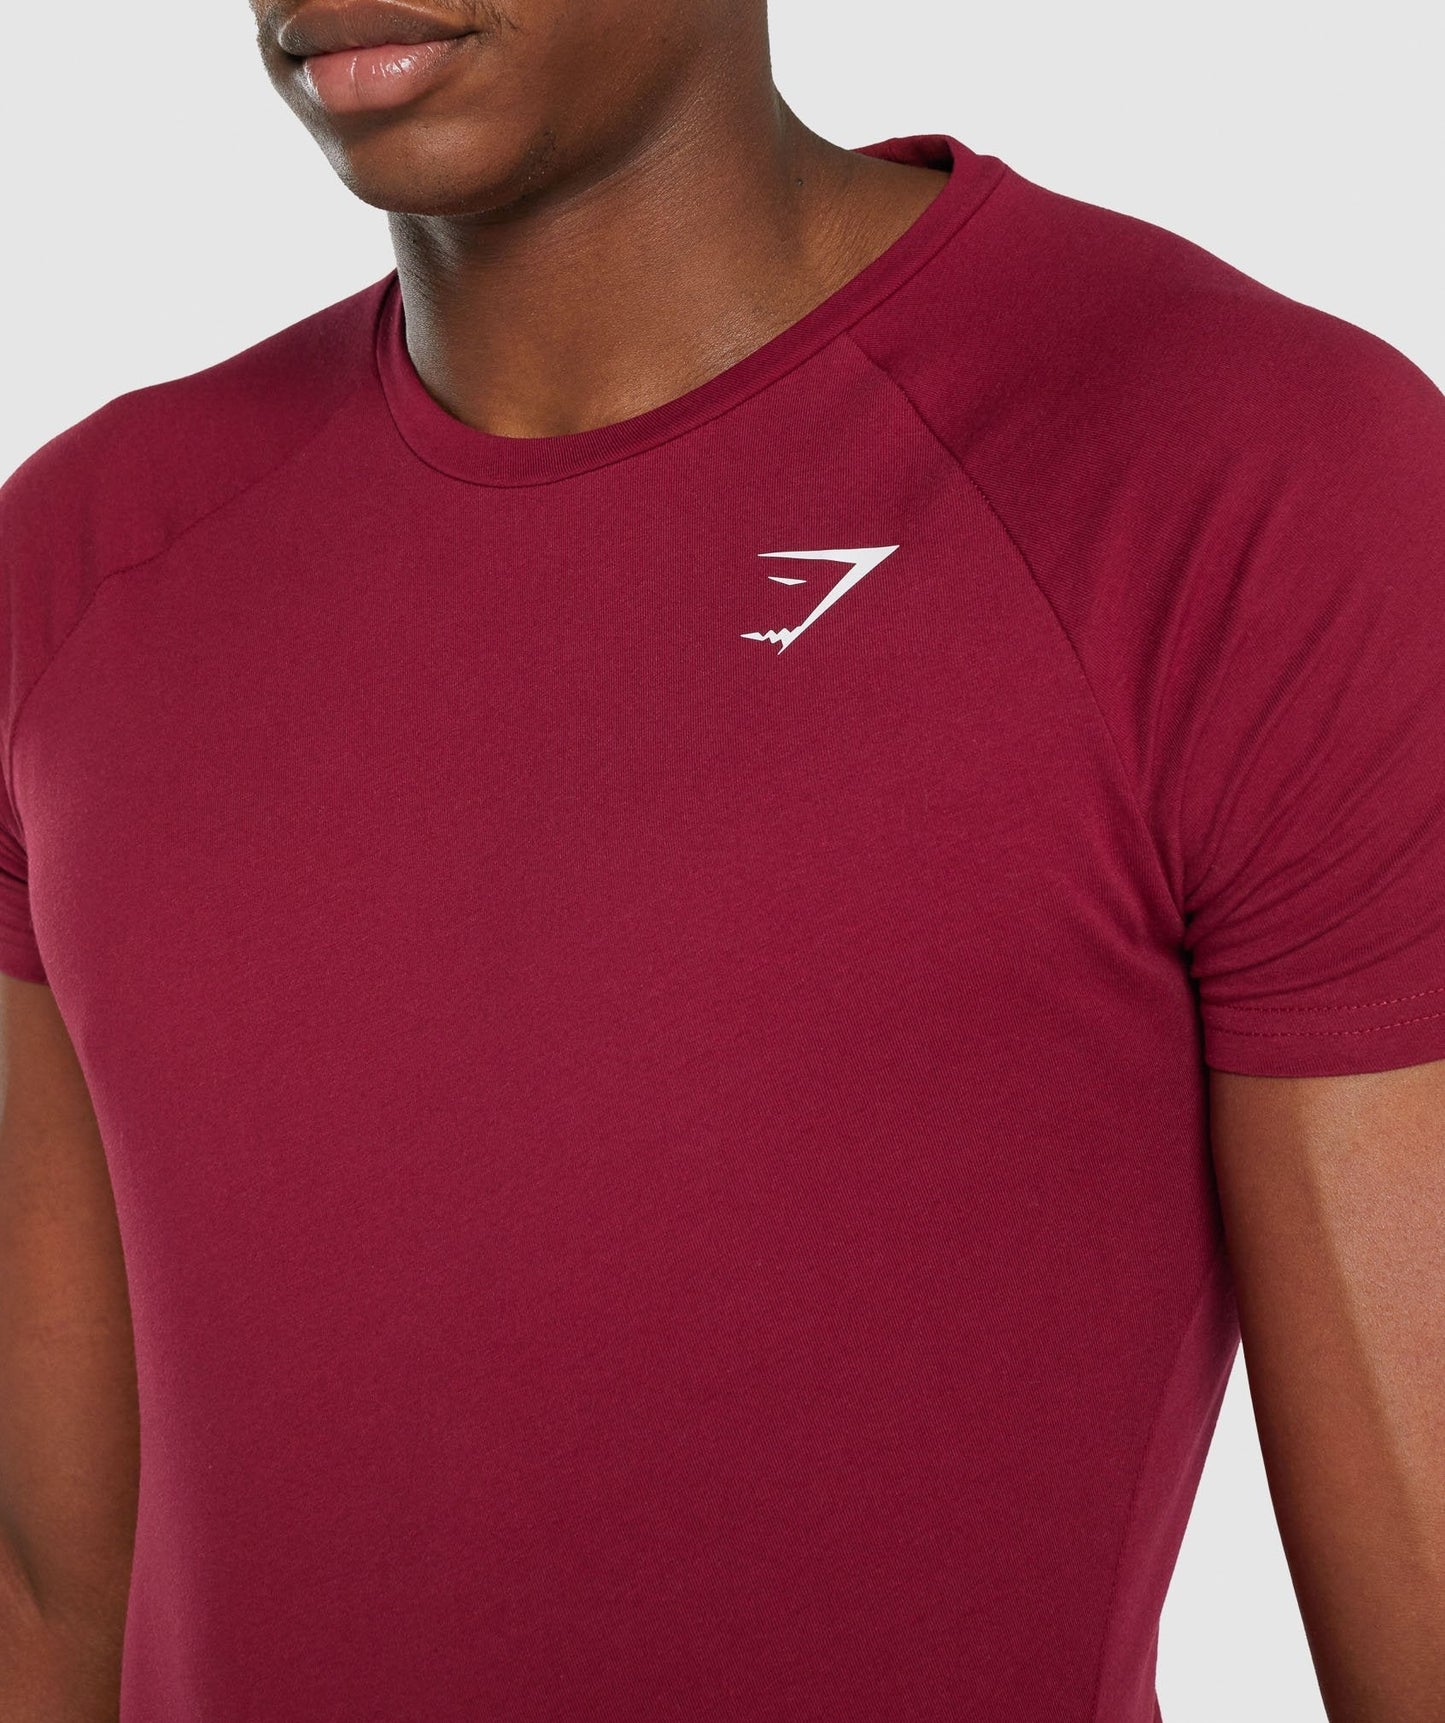 Gymshark Critical 2.0 T-Shirt - Burgundy – Client 446 100K products